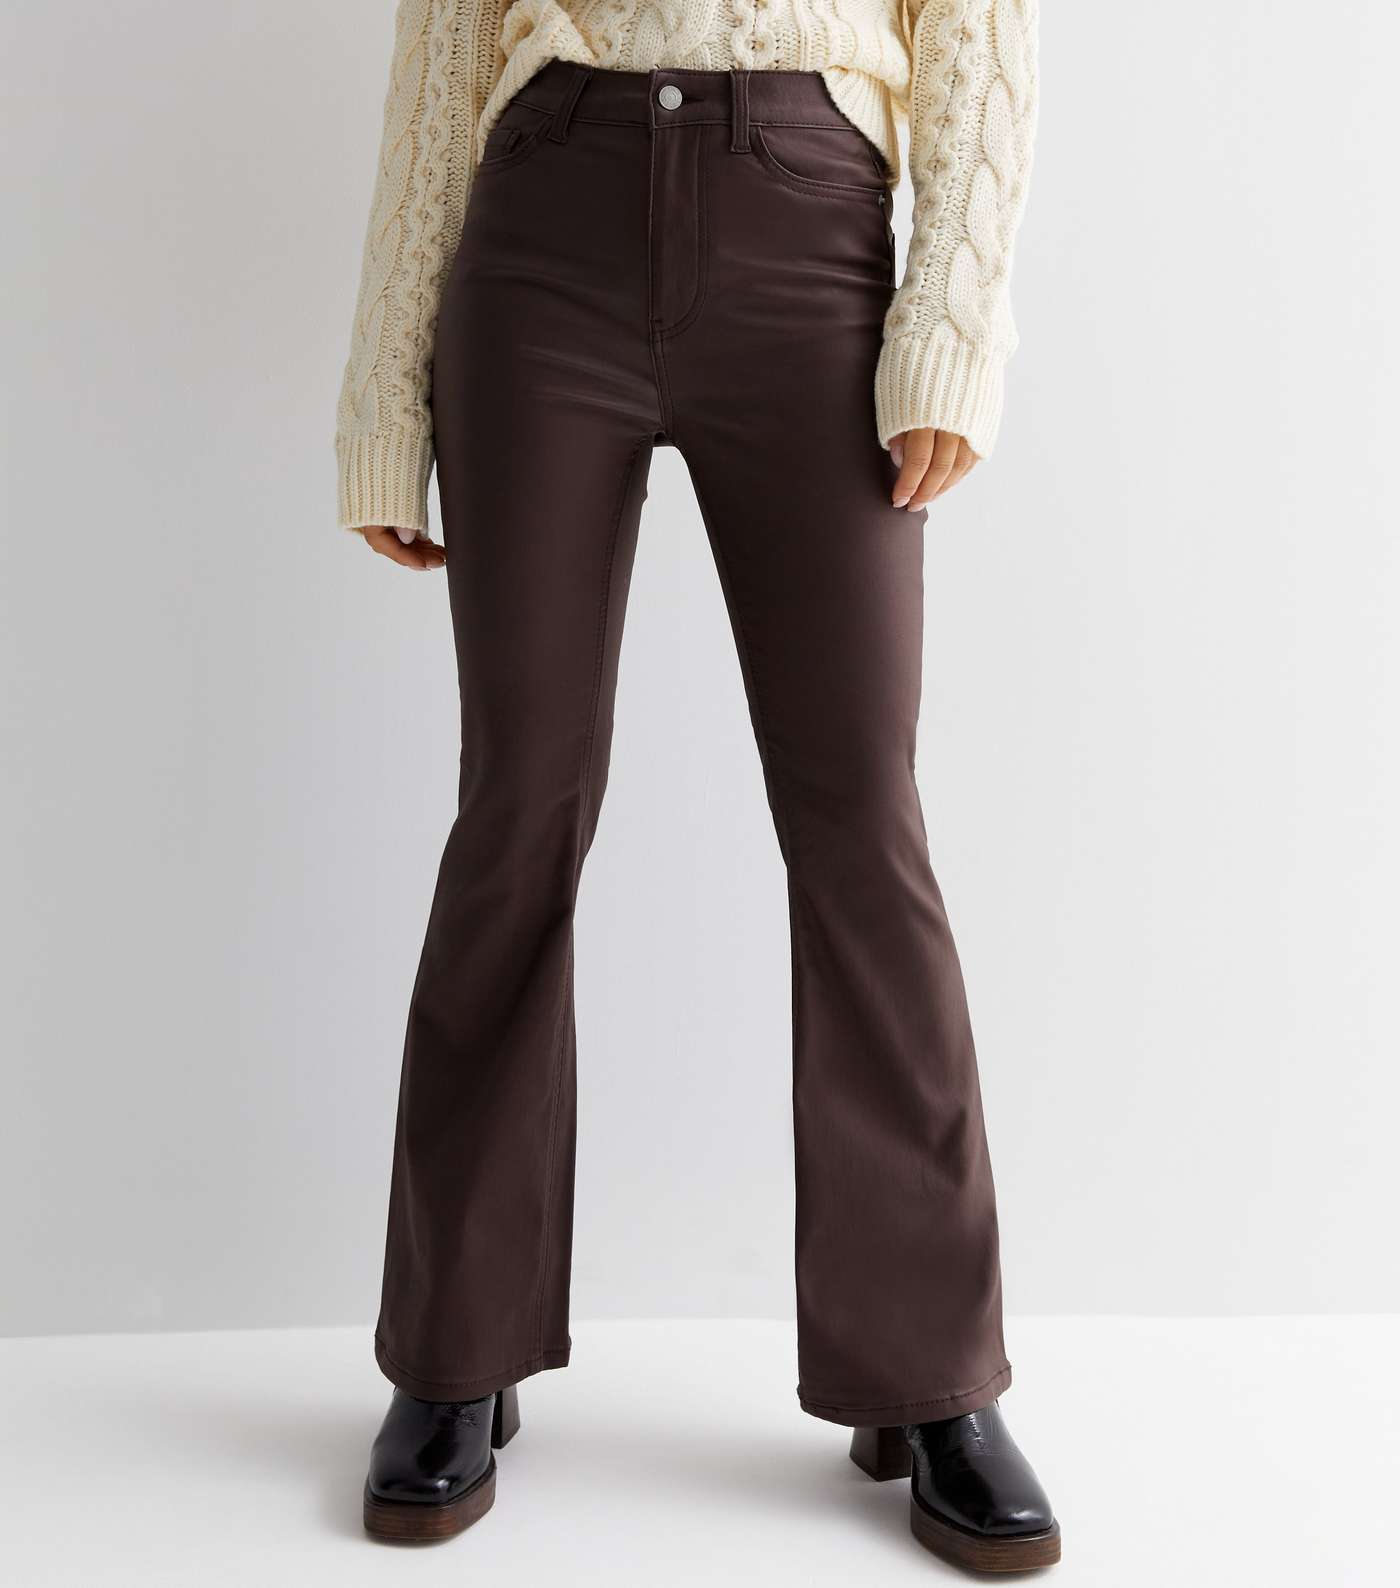 Petite Dark Brown Coated Leather-Look Waist Enhance Quinn Bootcut Jeans Image 2